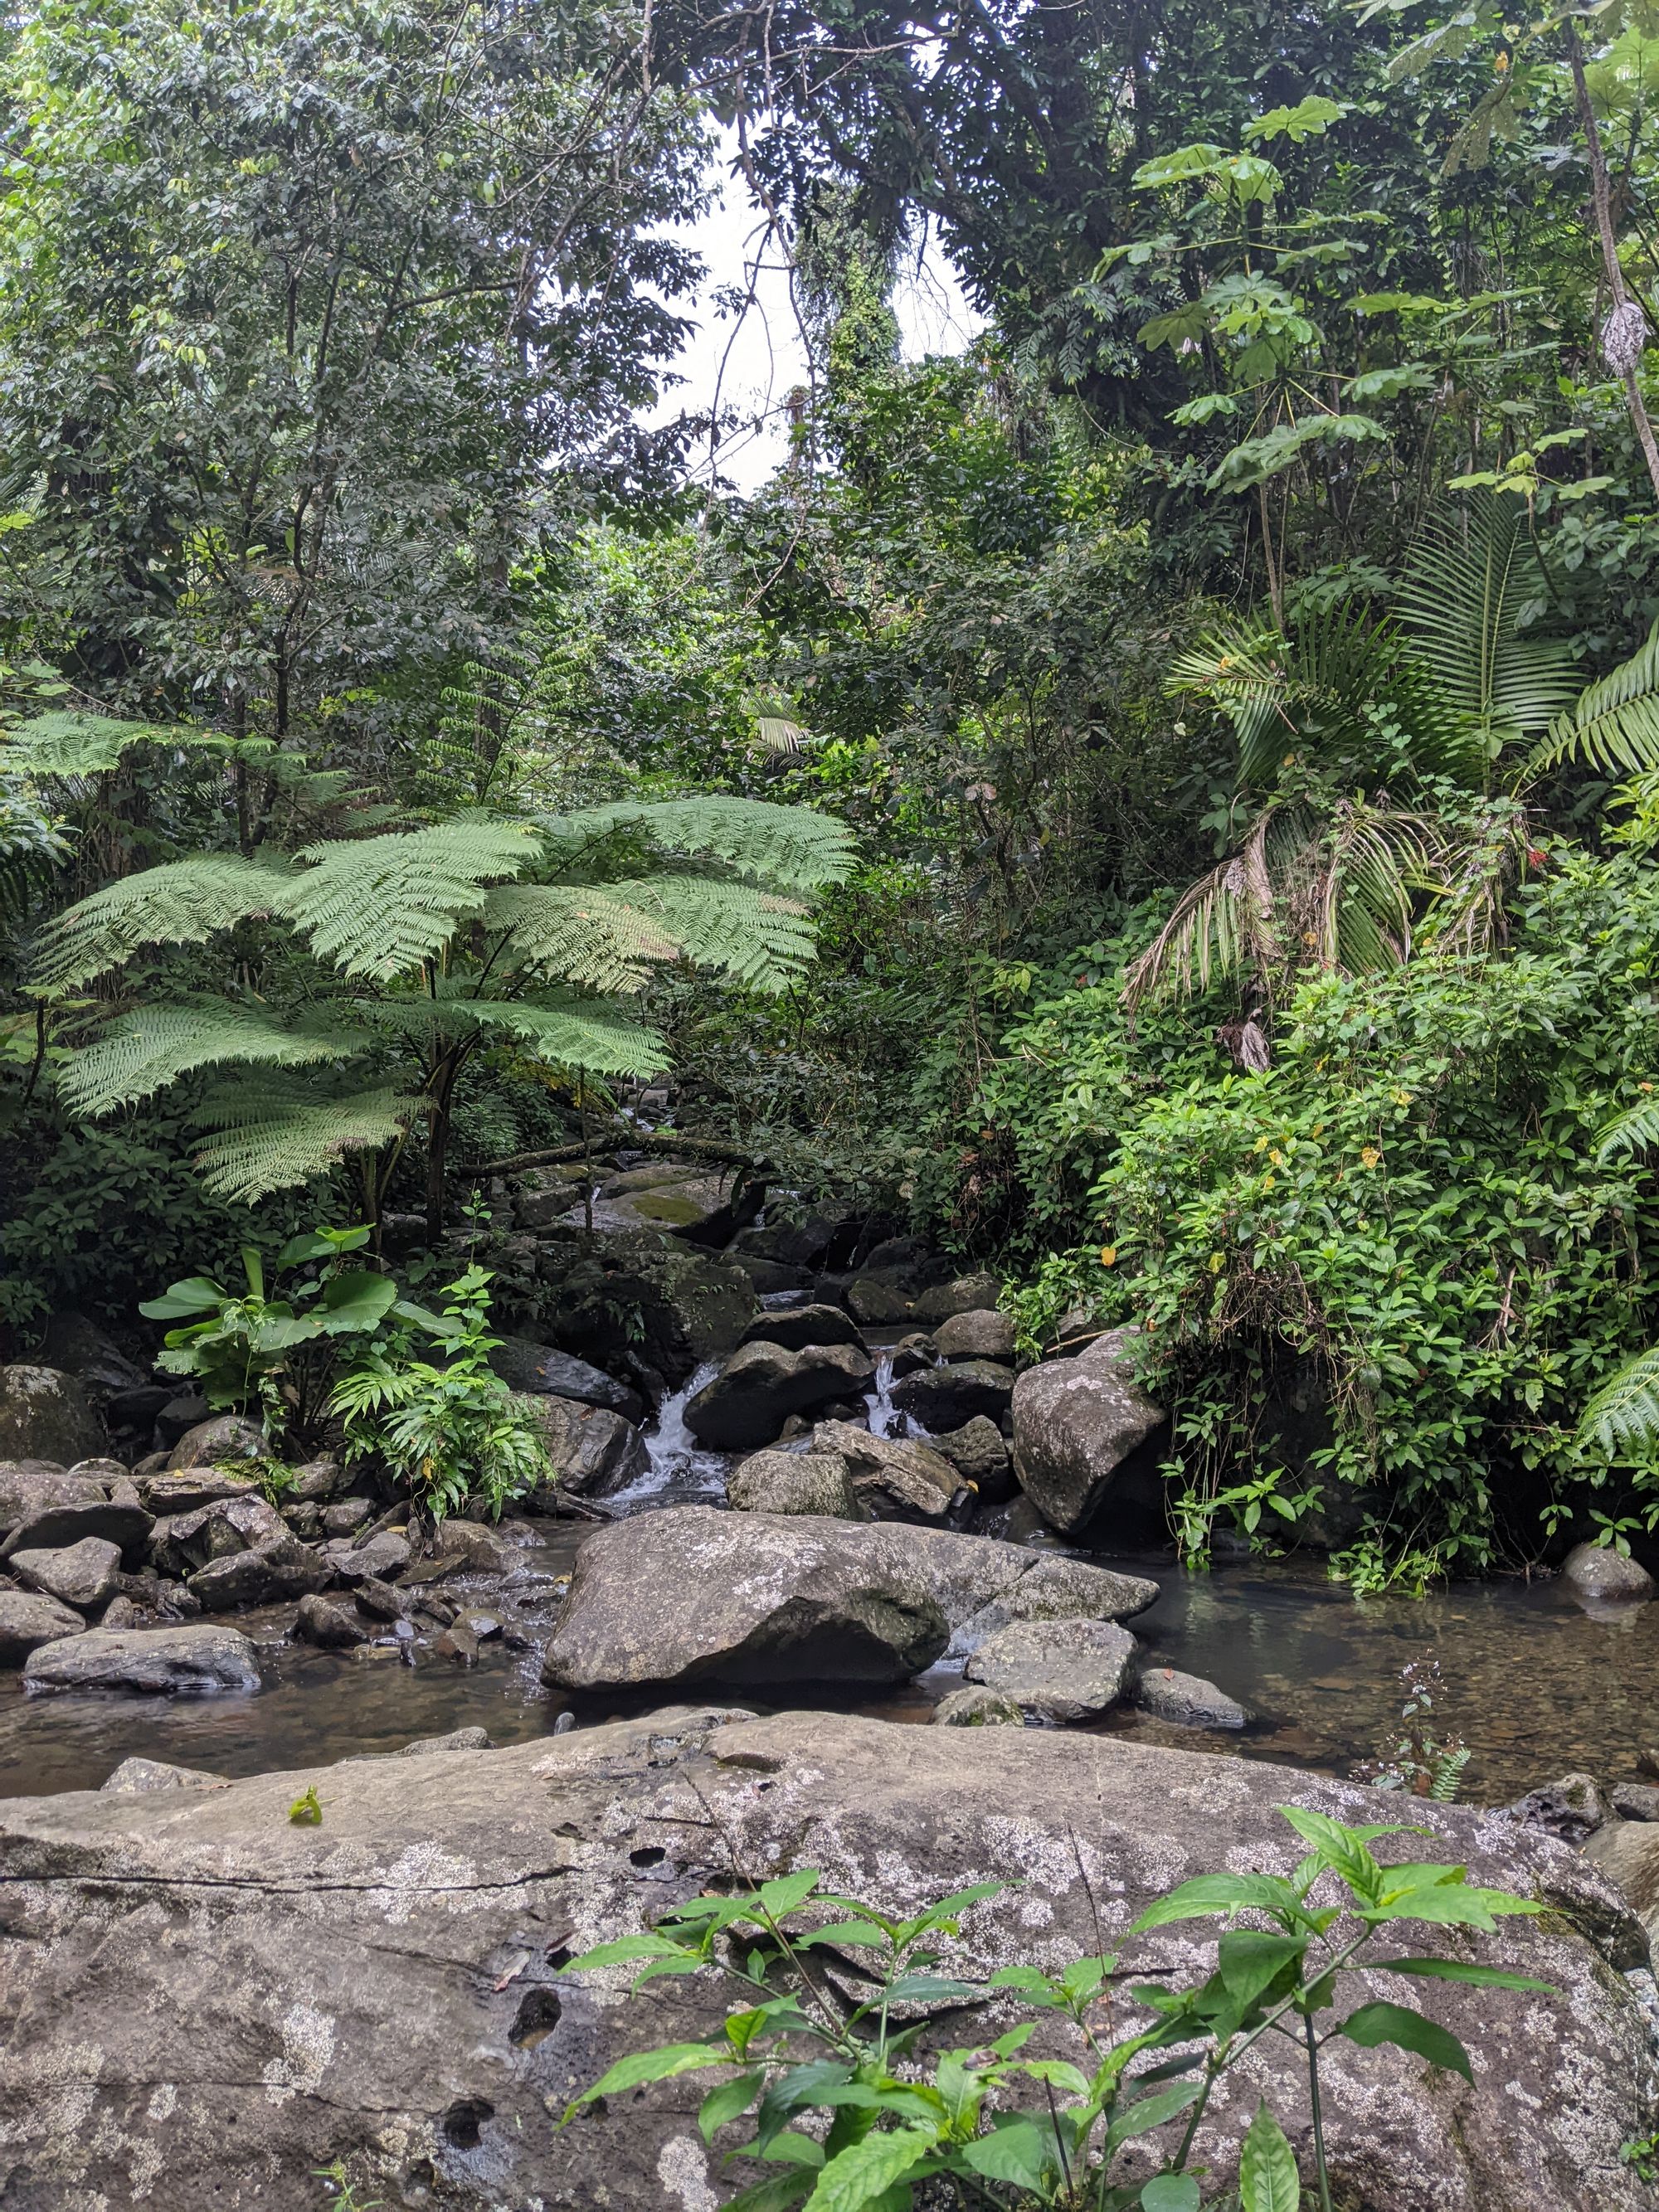 A small waterfall with a beautiful fern tree.